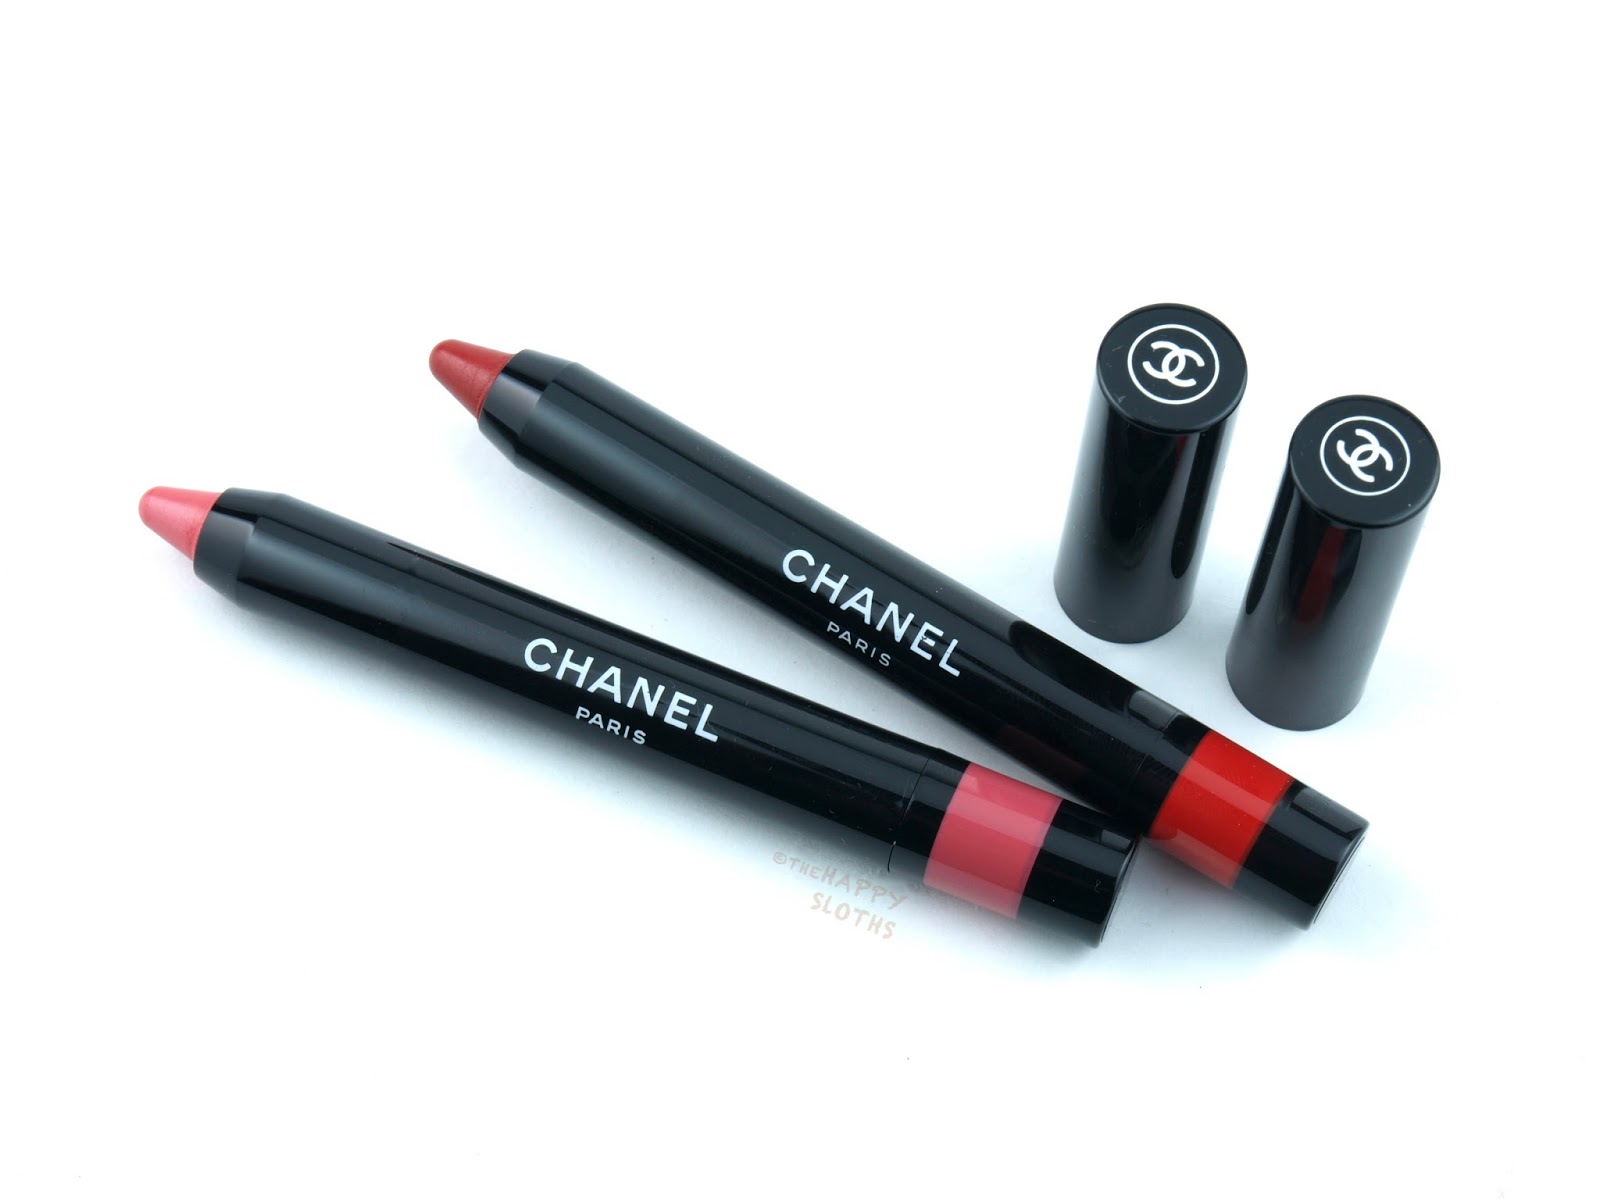 Chanel Le Rouge Crayon de Couleur: Review and Swatches